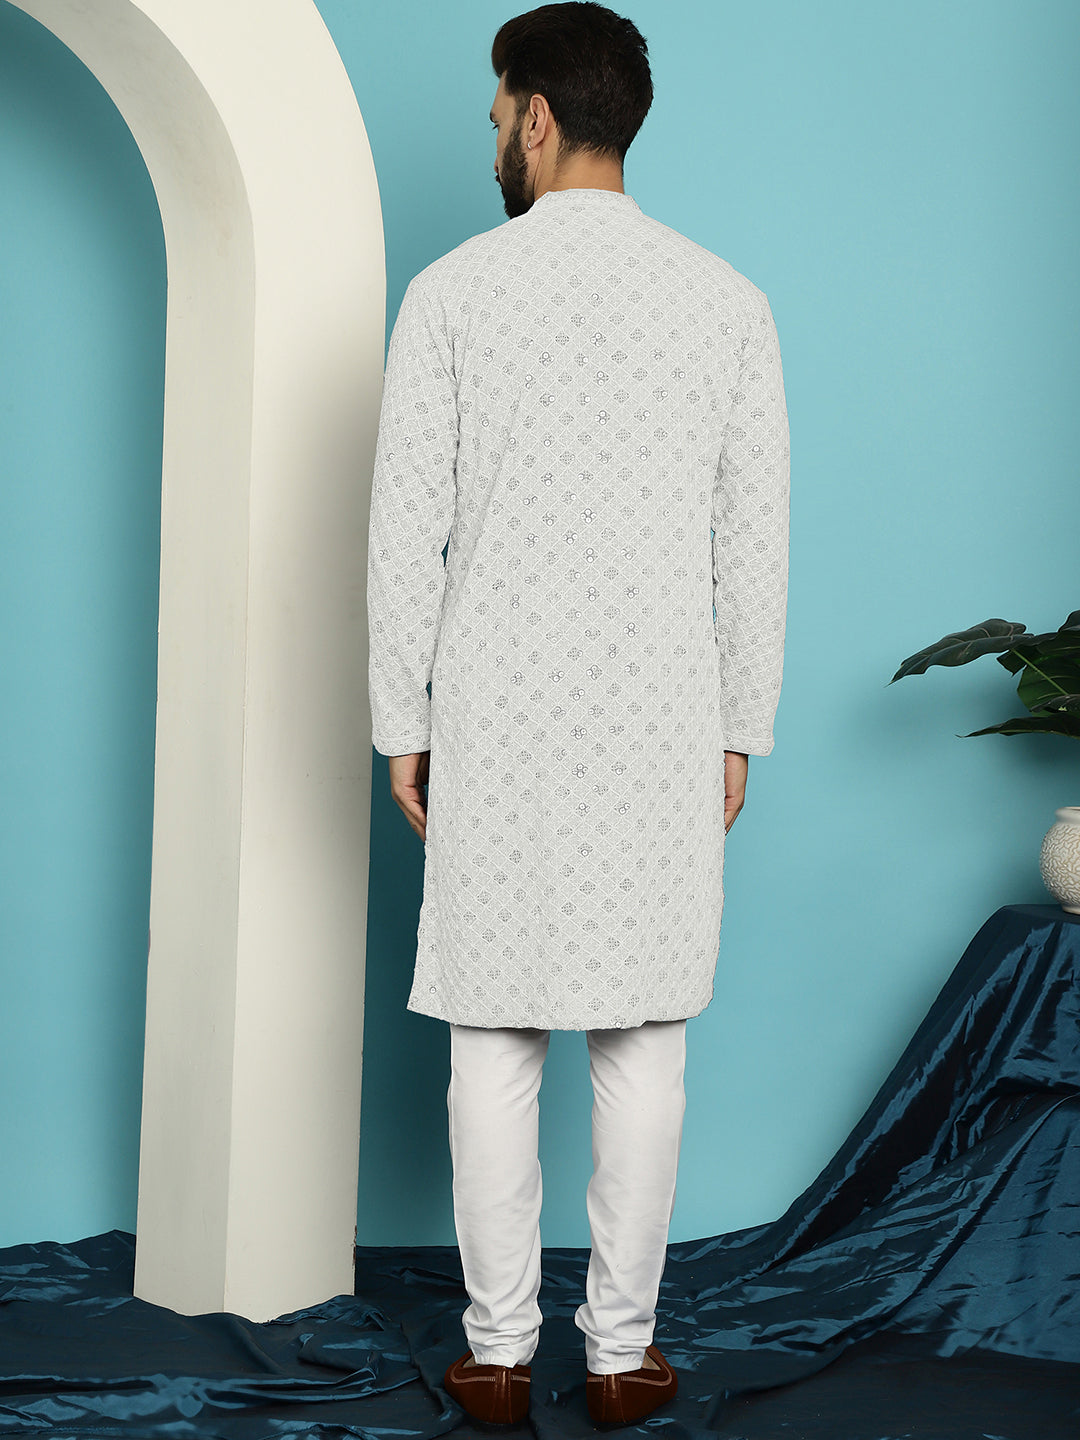 Men's Sequence White Cotton Kurta and White Pyjama